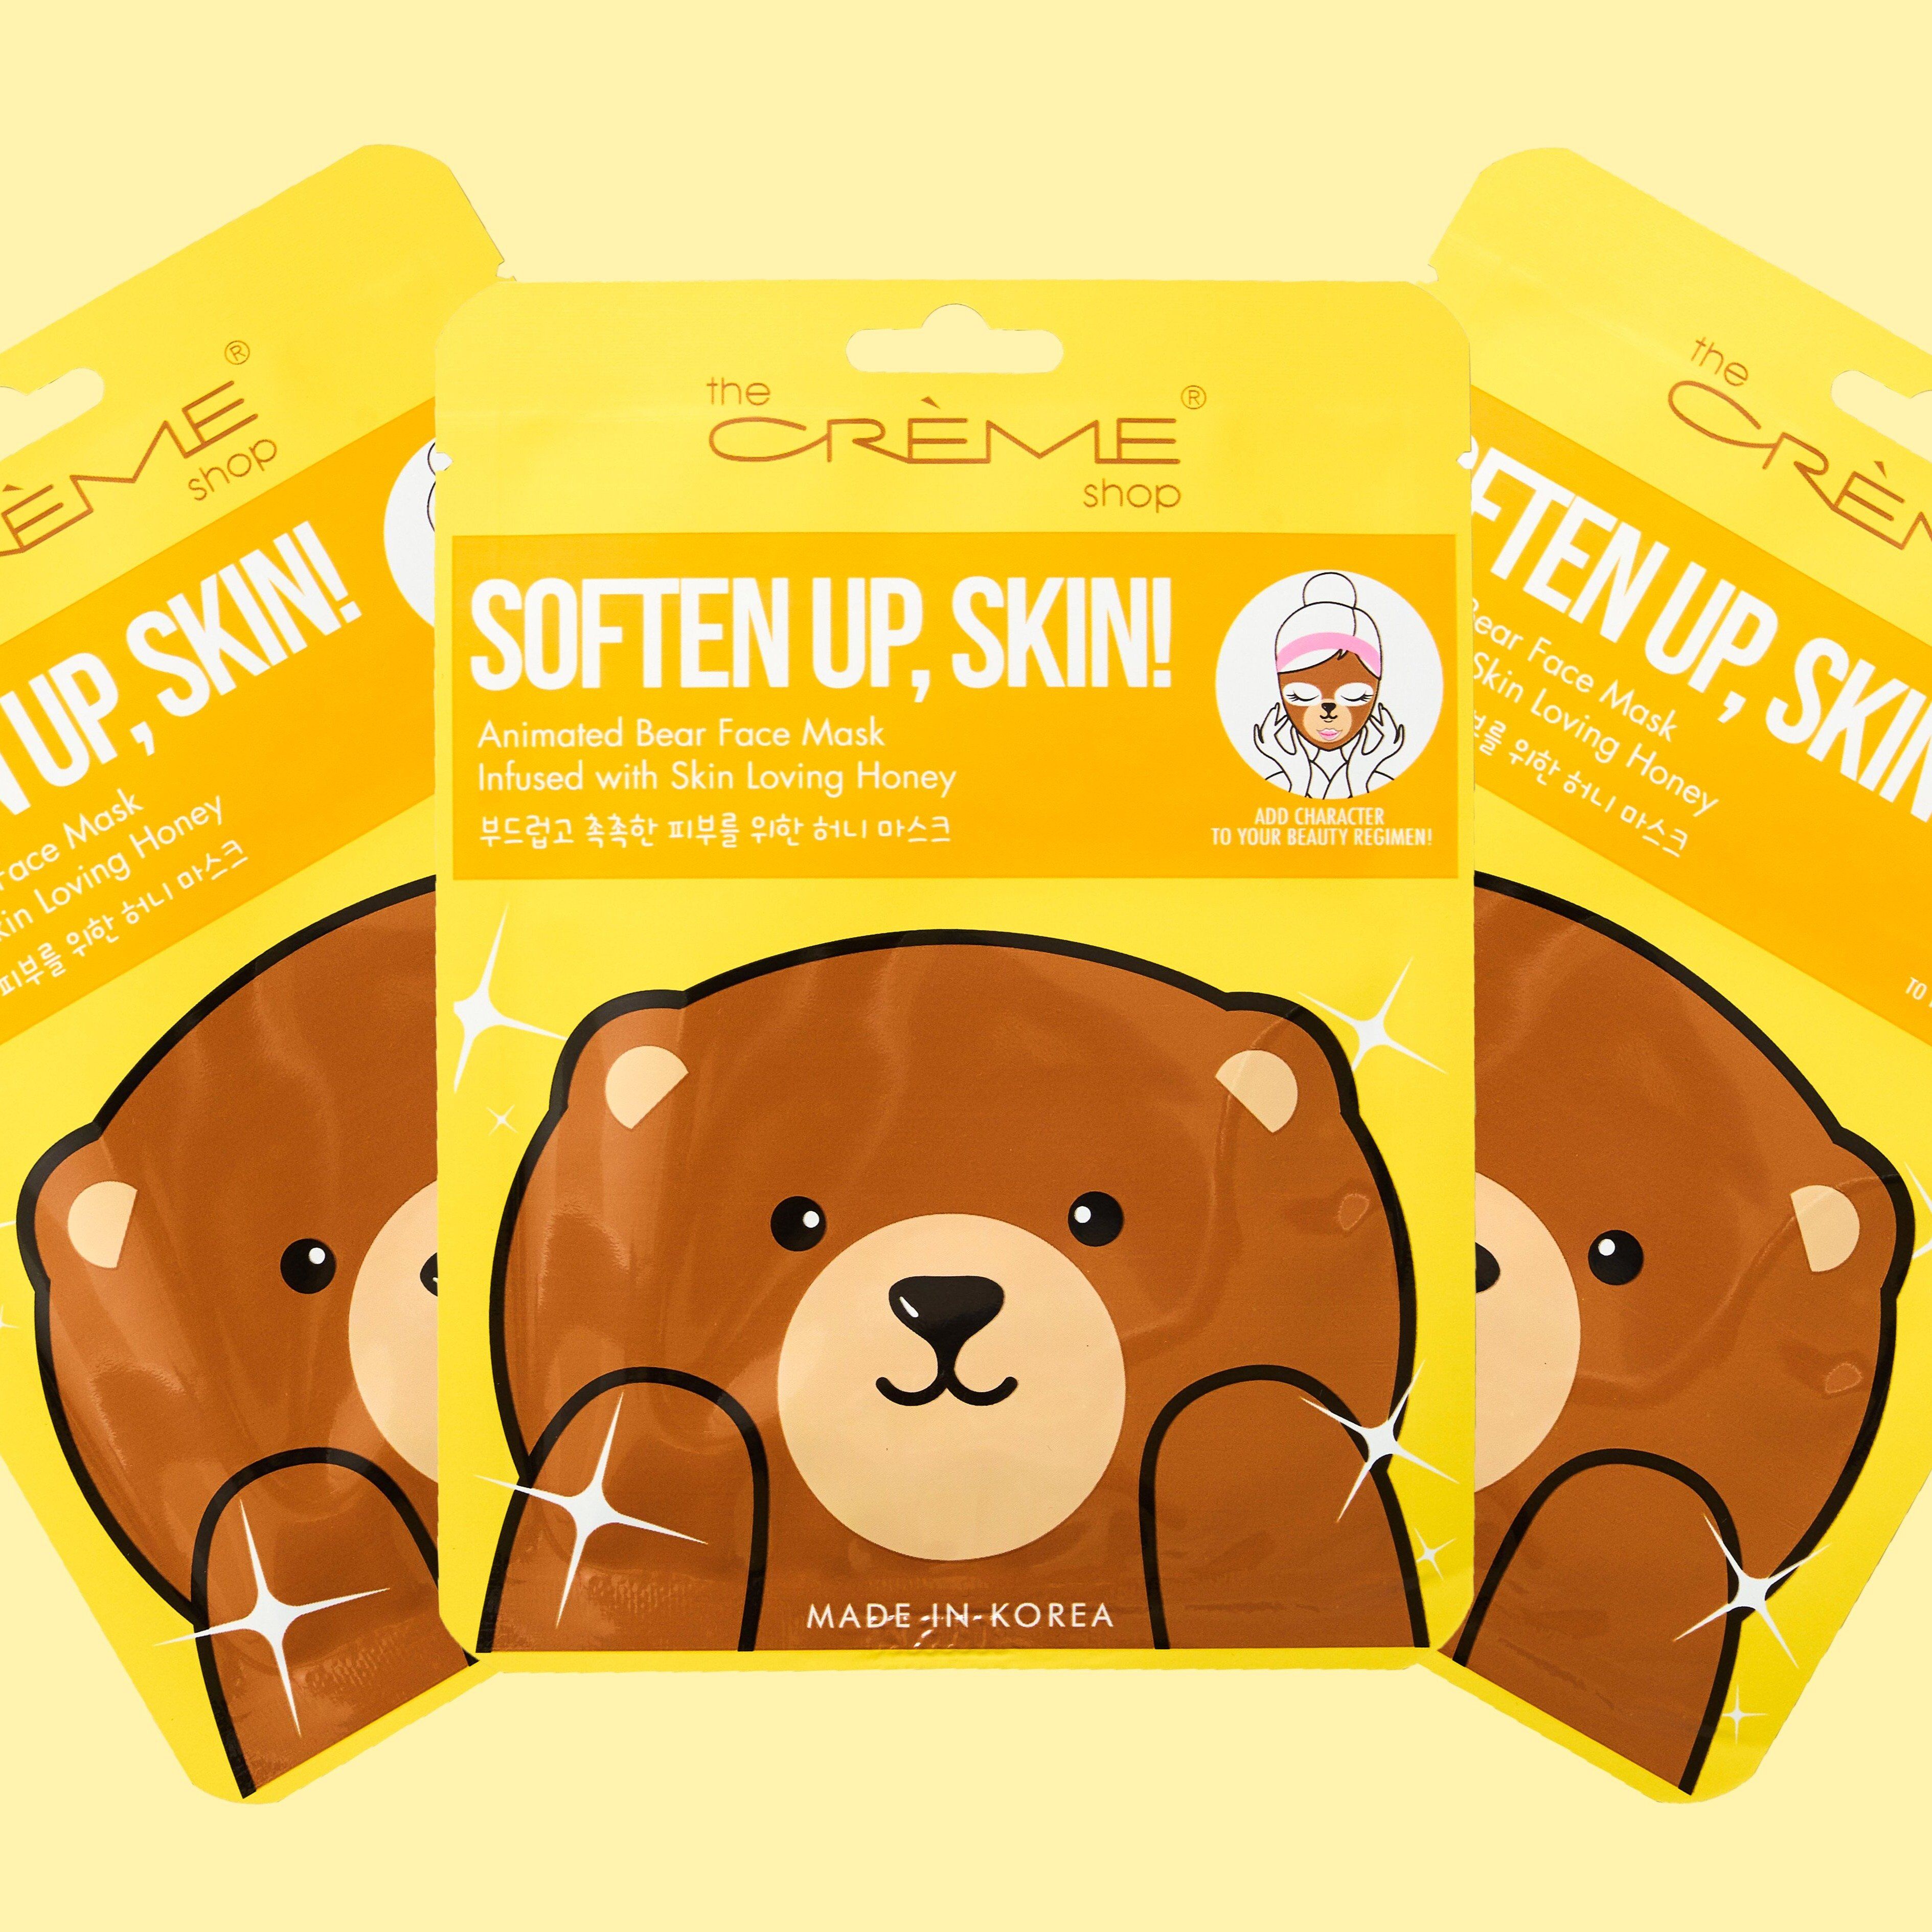 The Crème Shop - Soften Up, Skin! Animated Bear Face Mask - Skin Loving Honey